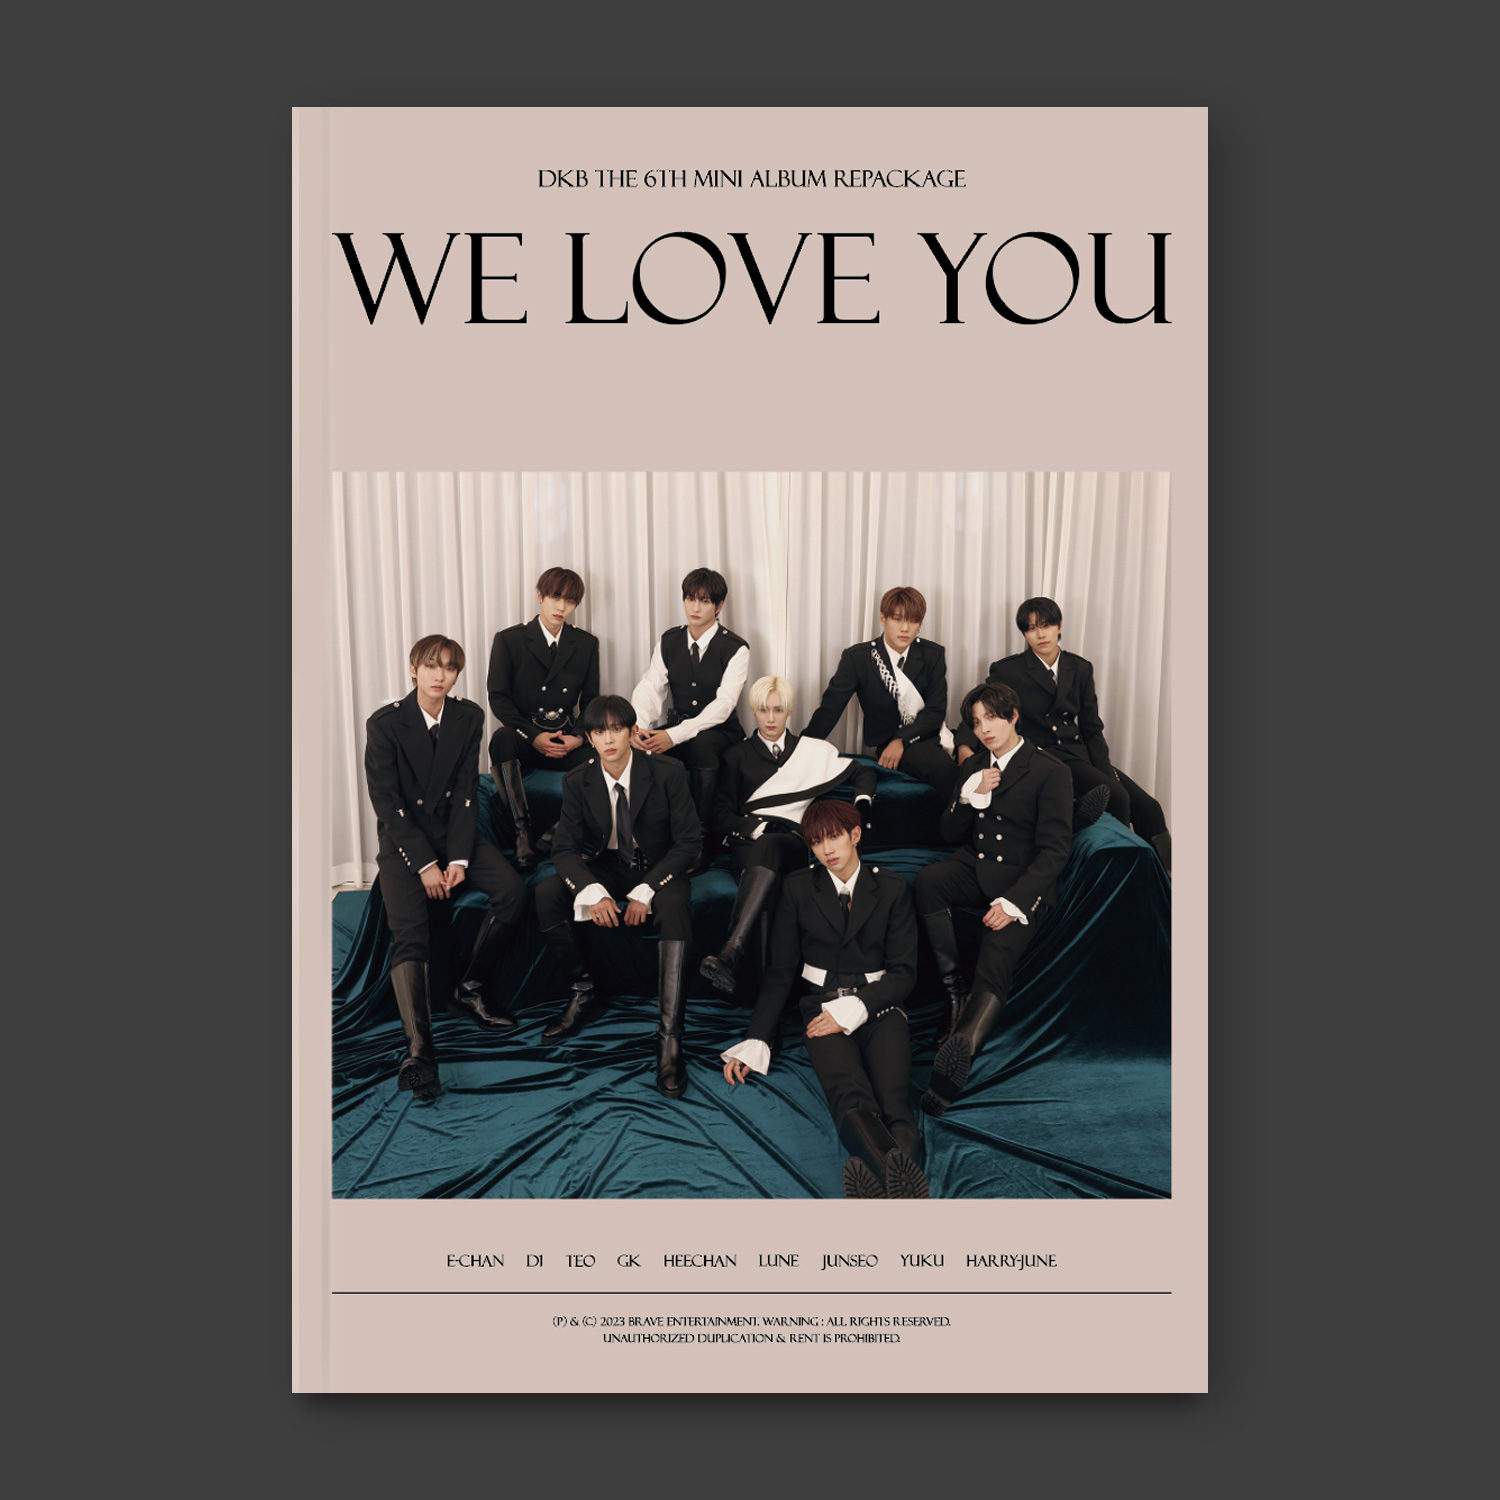 DKB - the 6th Mini Album Repackage [We Love You] (Night Ver.)케이팝스토어(kpop store)